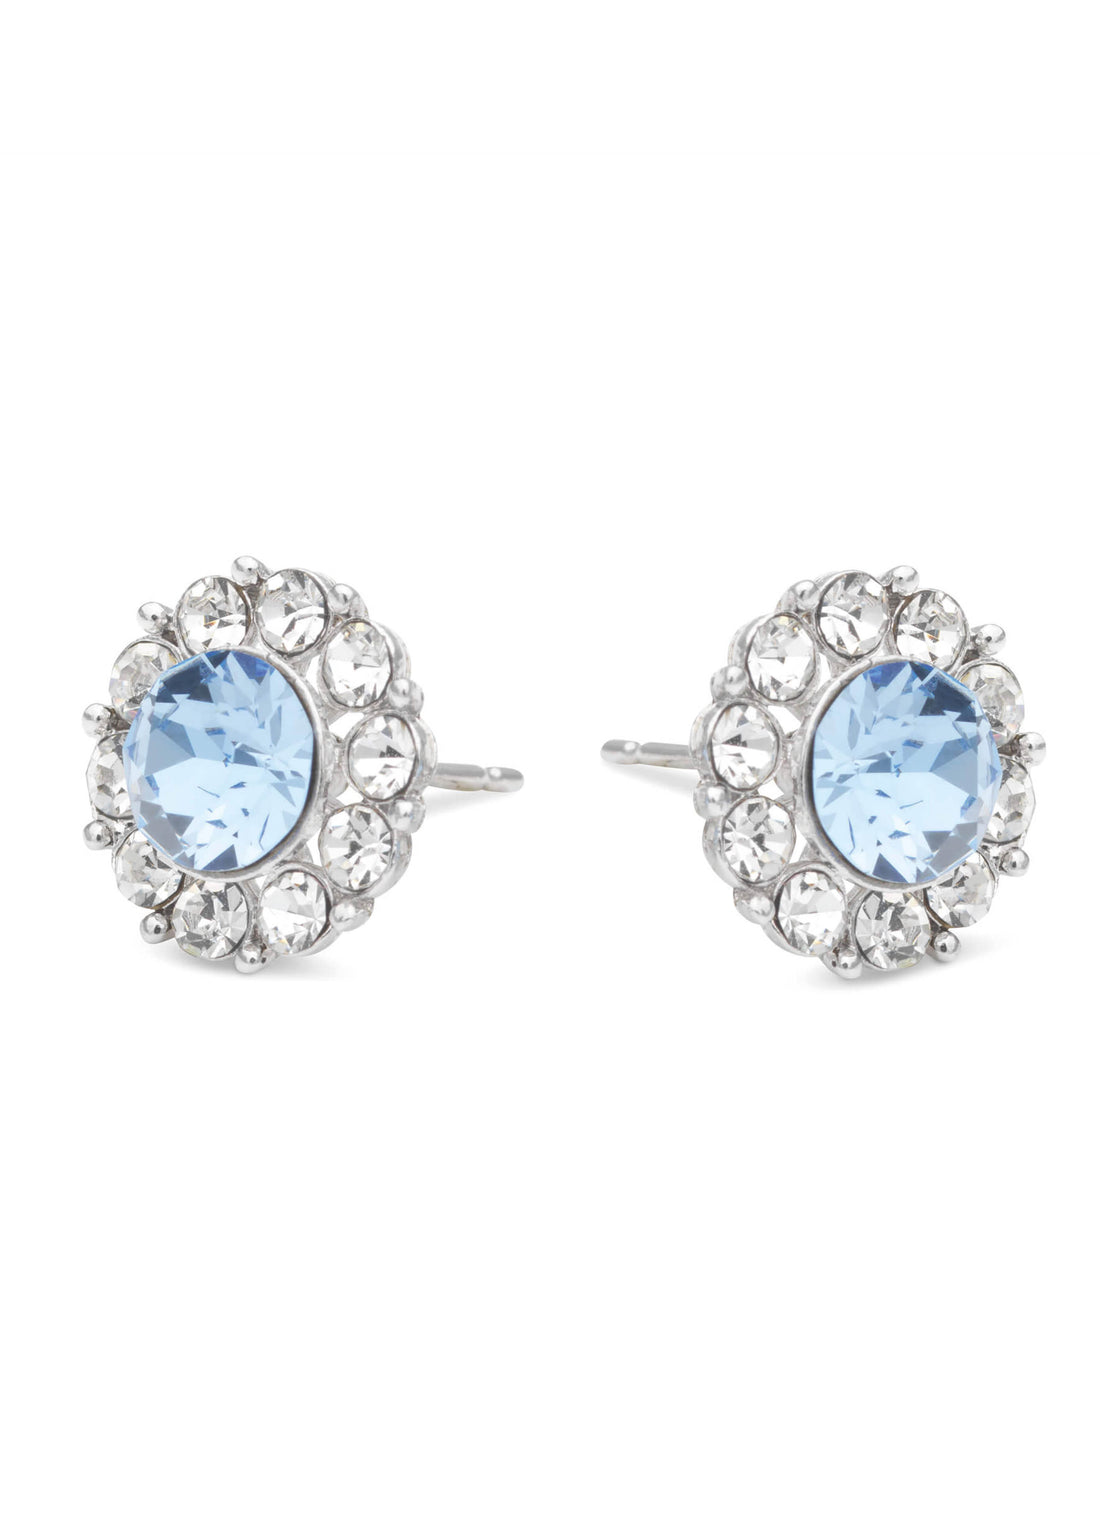 miss-sofia-earrings-light-sapphire